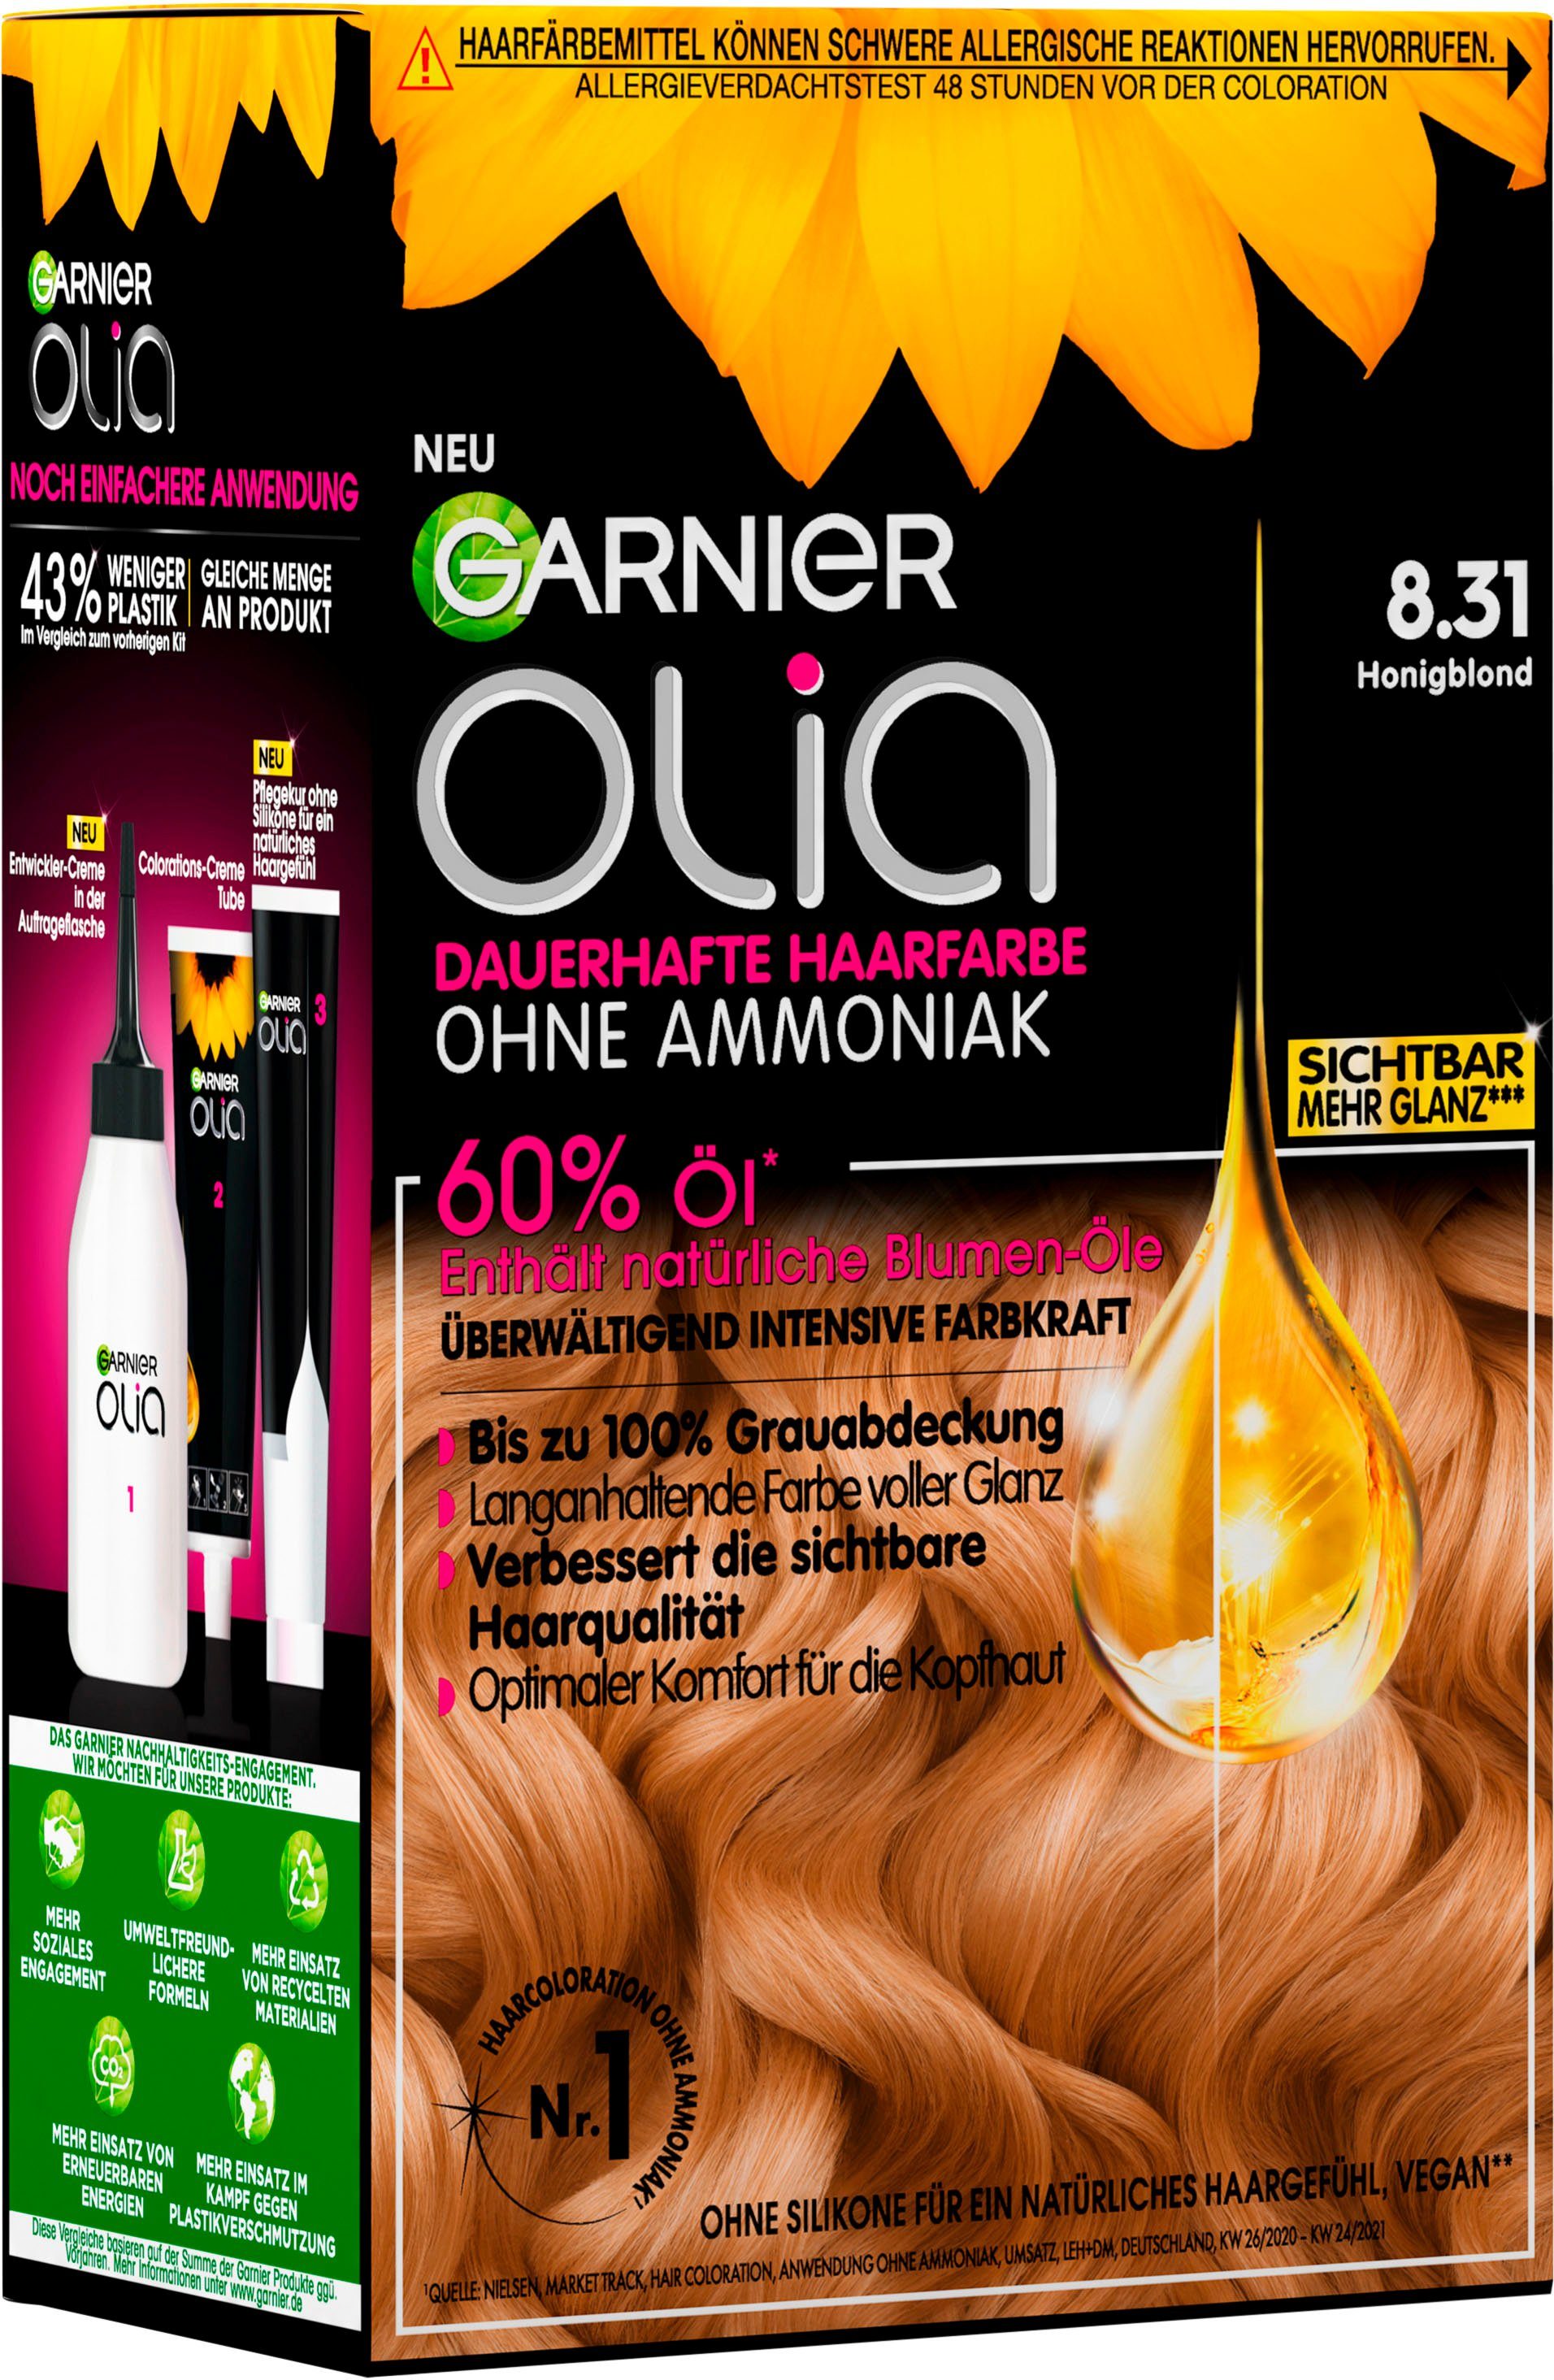 Set, Garnier 3-tlg., Honigblond Coloration Haarfarbe, 8.31 GARNIER Olia dauerhafte